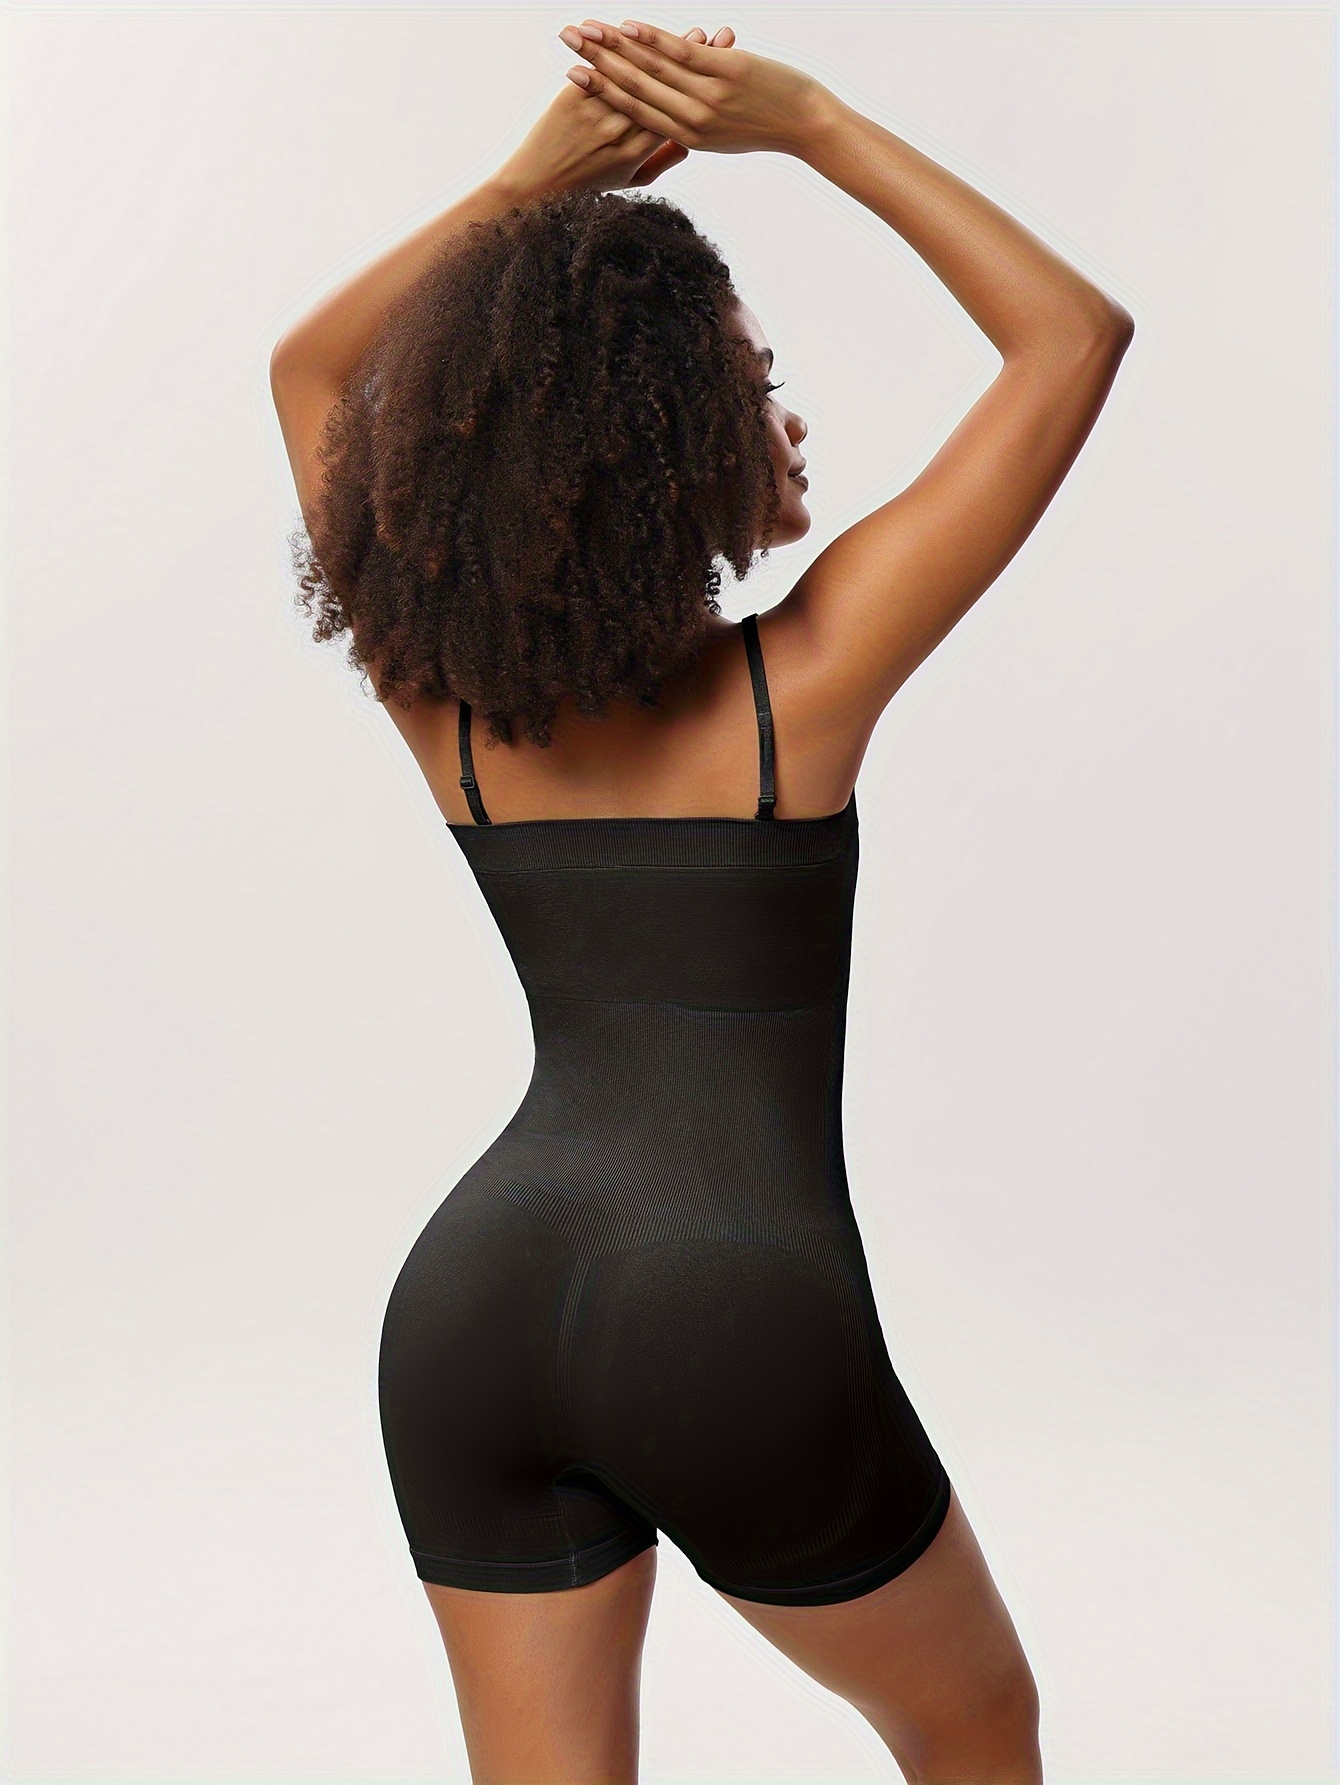 Strapless Shaping Bodysuit, Seamless Tummy Control Slimming Body Shaper,  Women's Underwear & Shapewear